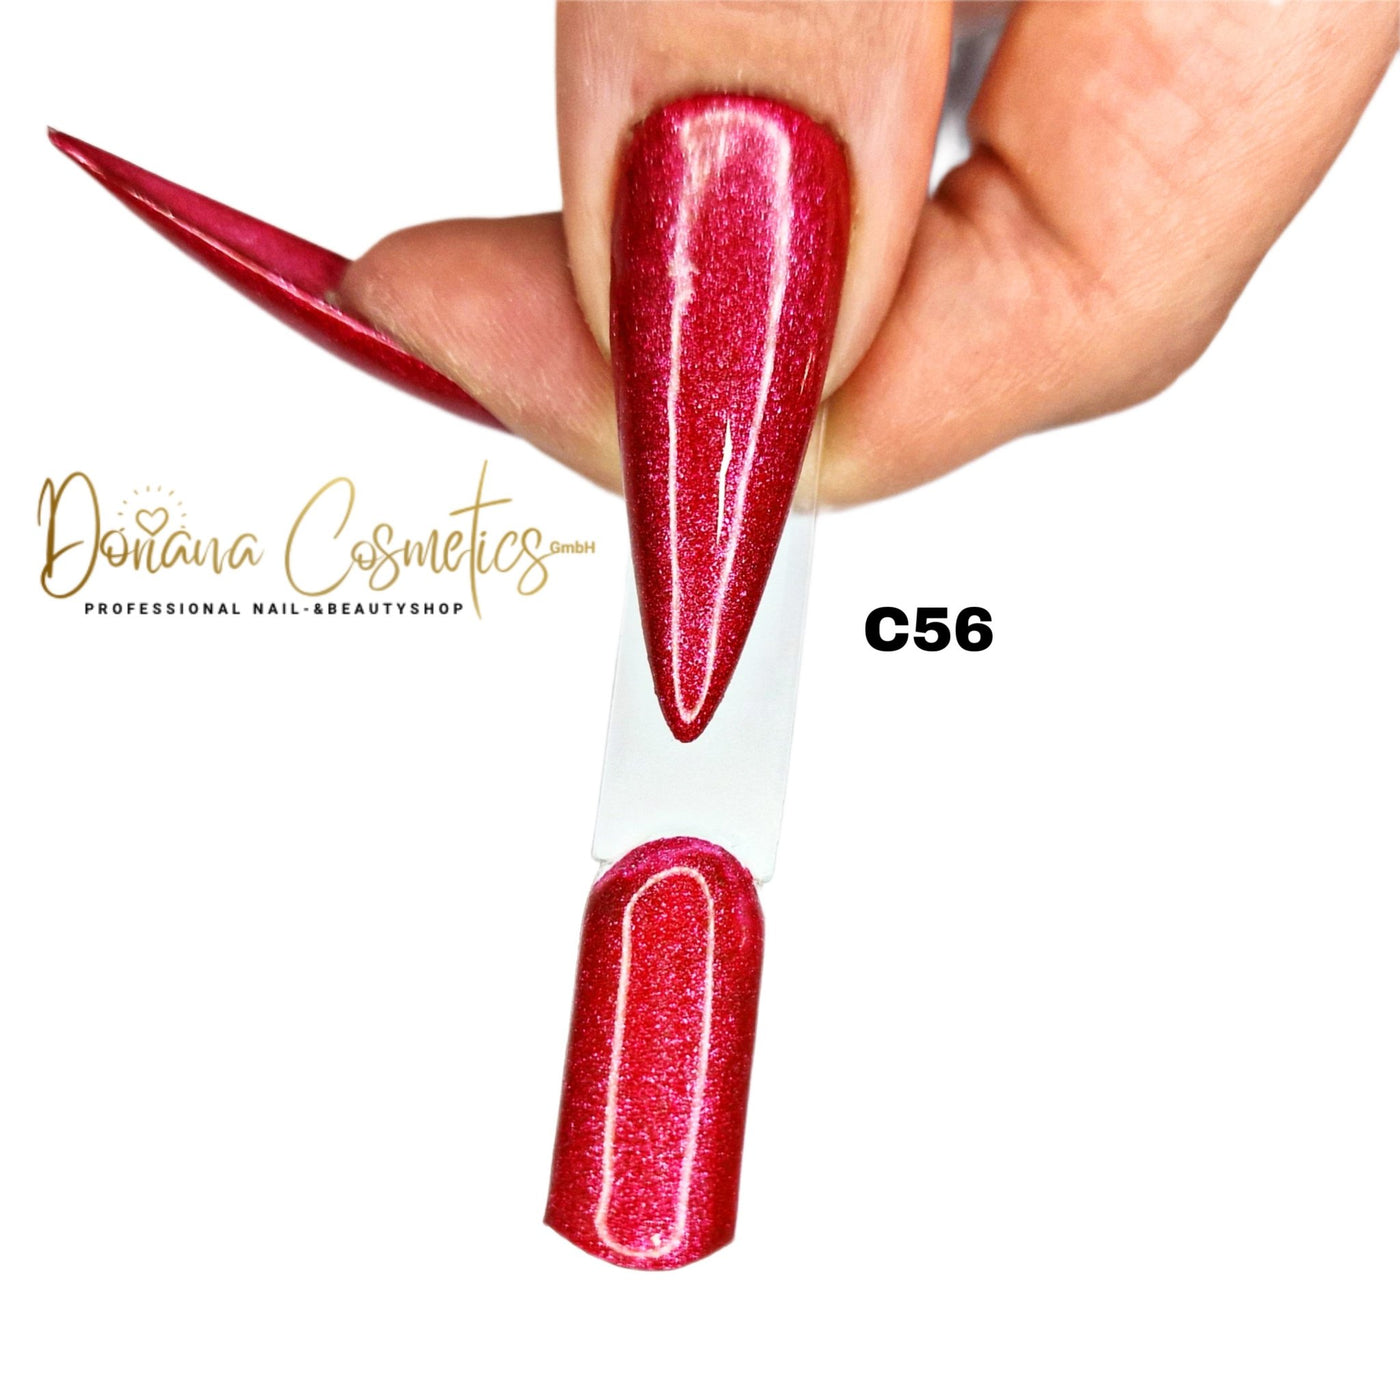 Doriana Cosmetics MAGICALLY Colourgel - Metallic Amore (Art.-Nr.C56), 5 ml - Doriana Cosmetics GmbH